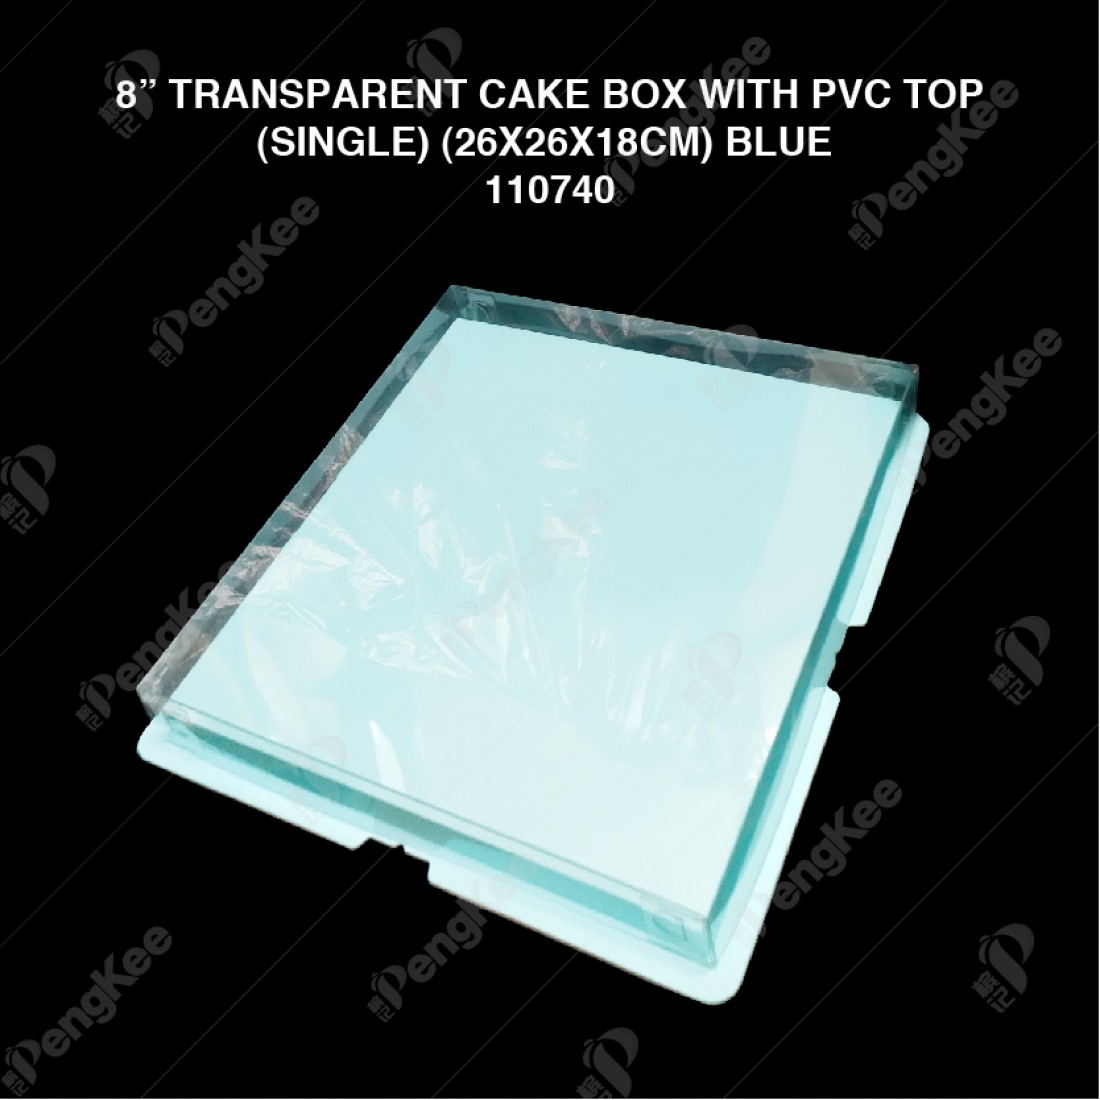 8" TRANSPARENT CAKE BOX WITH PVC TOP(SINGLE) (26*26*18CM)- BLUE